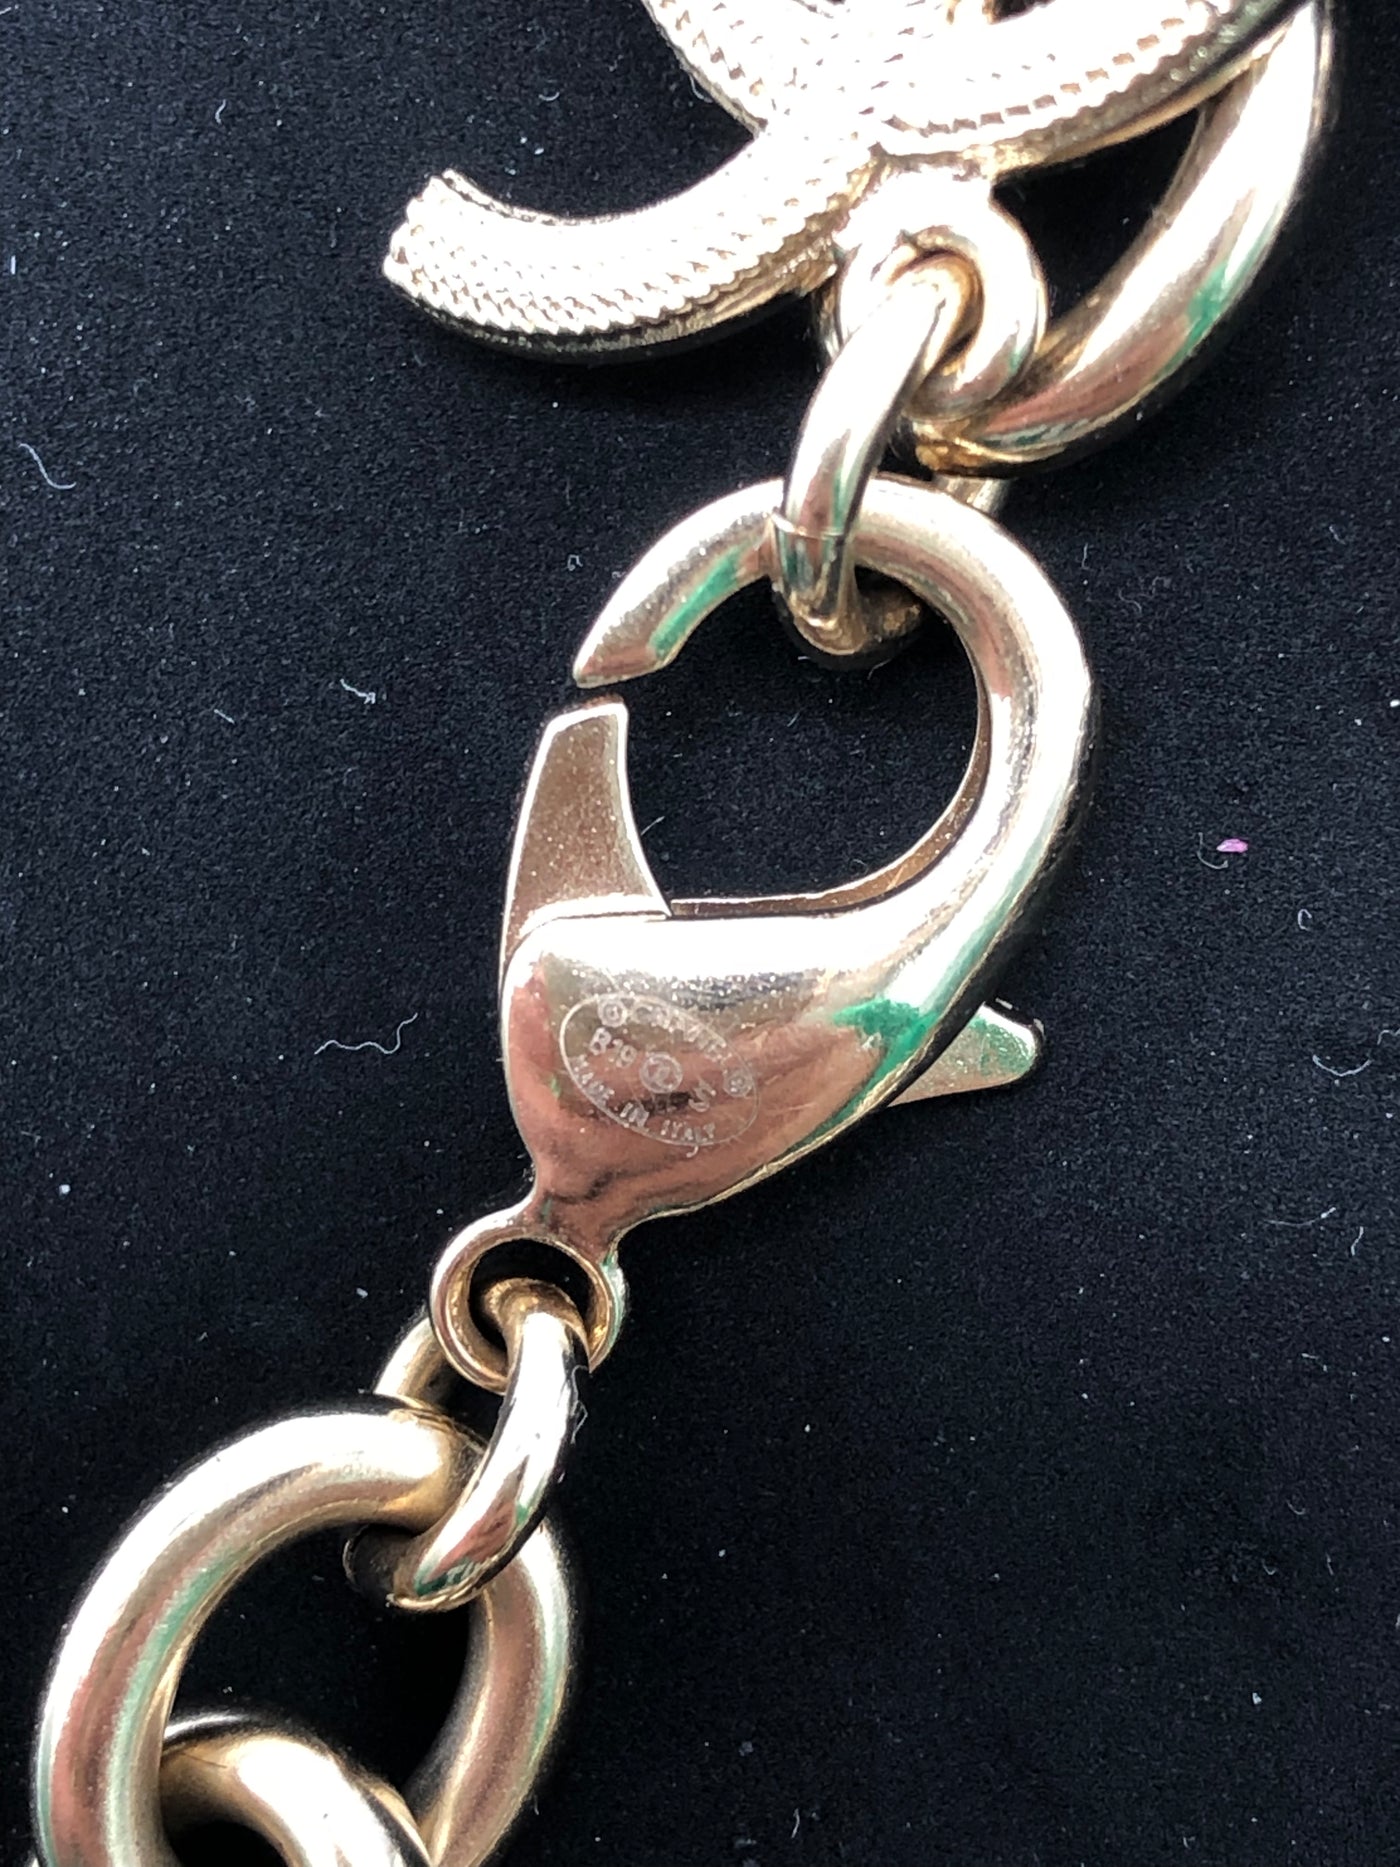 CHANEL Champagne Gold CC pendant bracelet with box